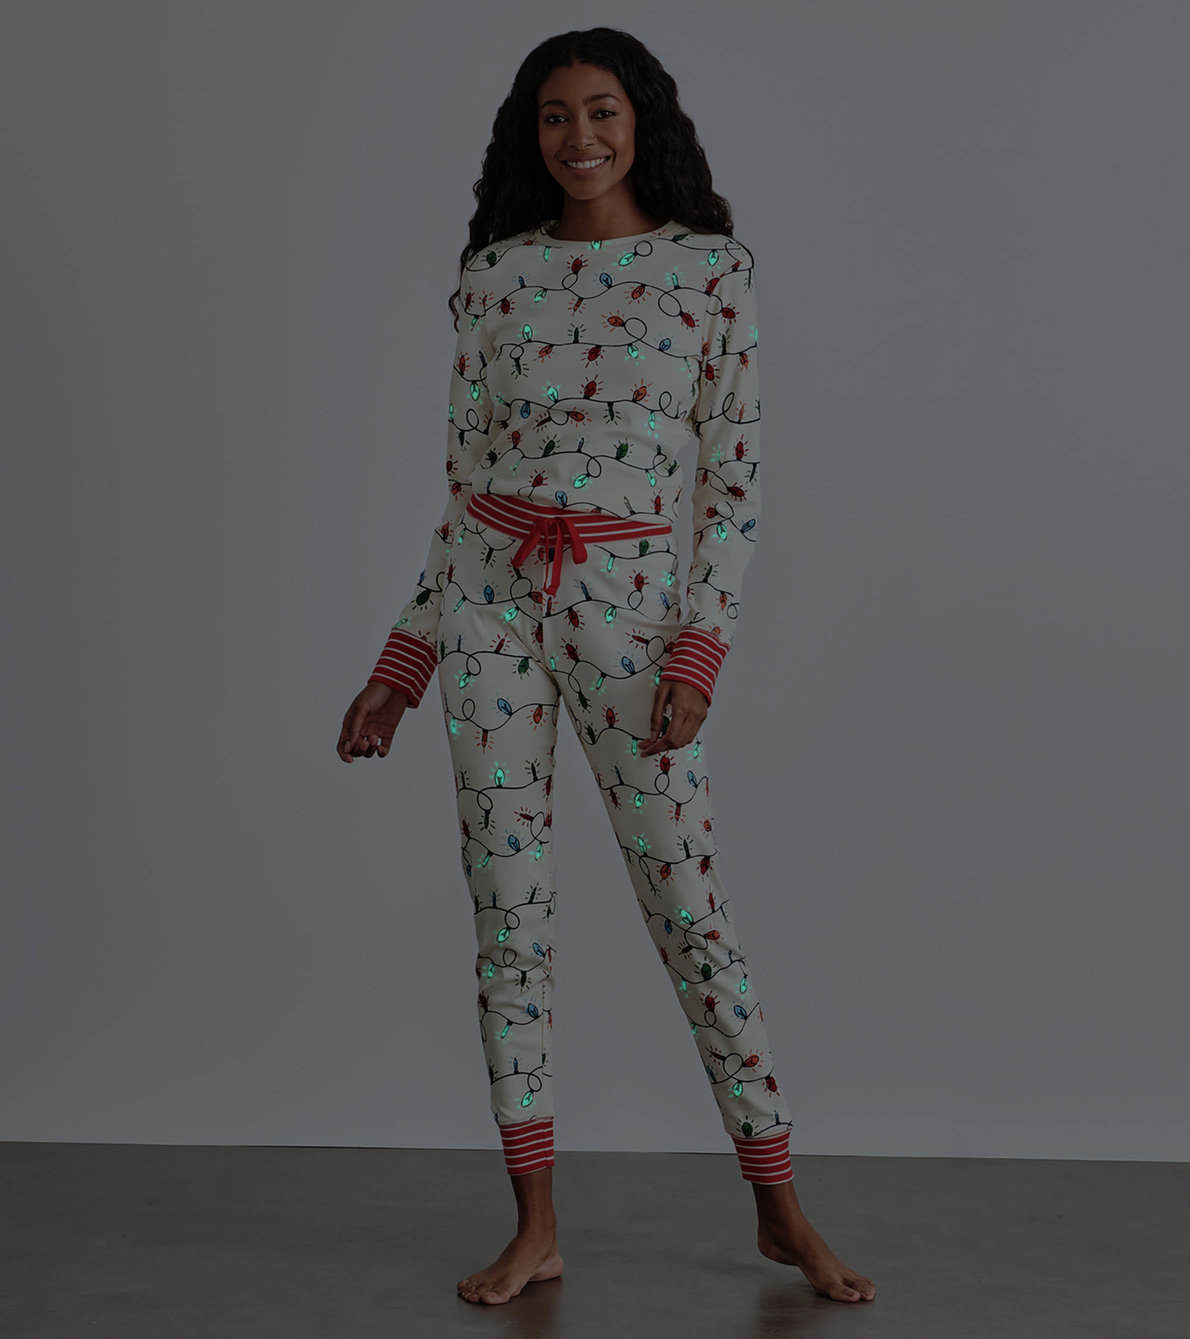 View larger image of Glowing Holiday Lights Women's Pajama Set